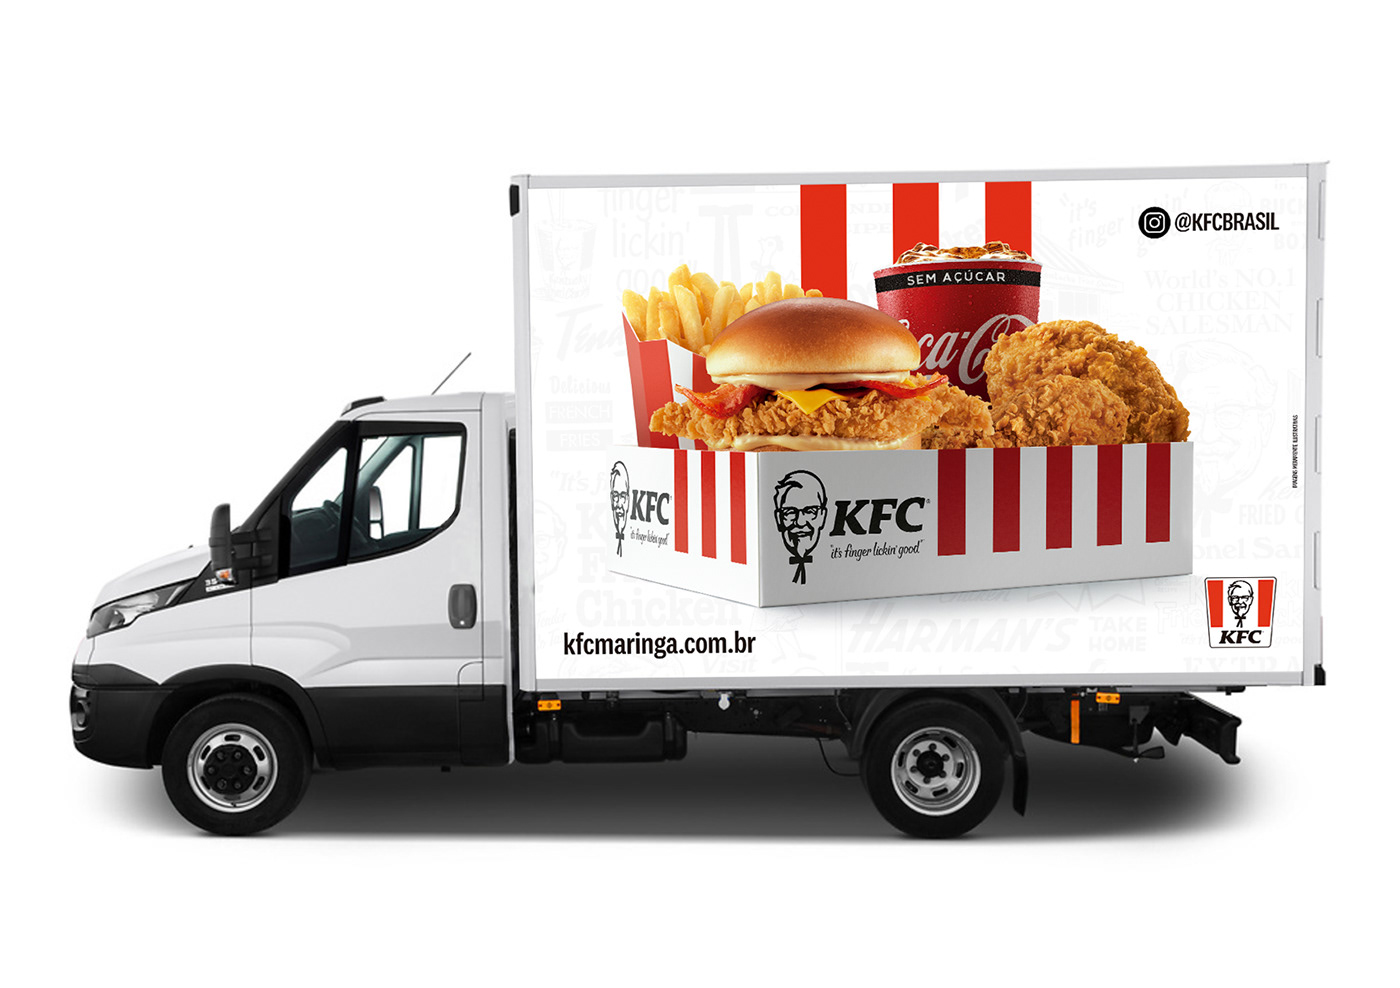 KFC balde londrina maringà Big Box caminhão kfc kfc truck foz do iguaçu